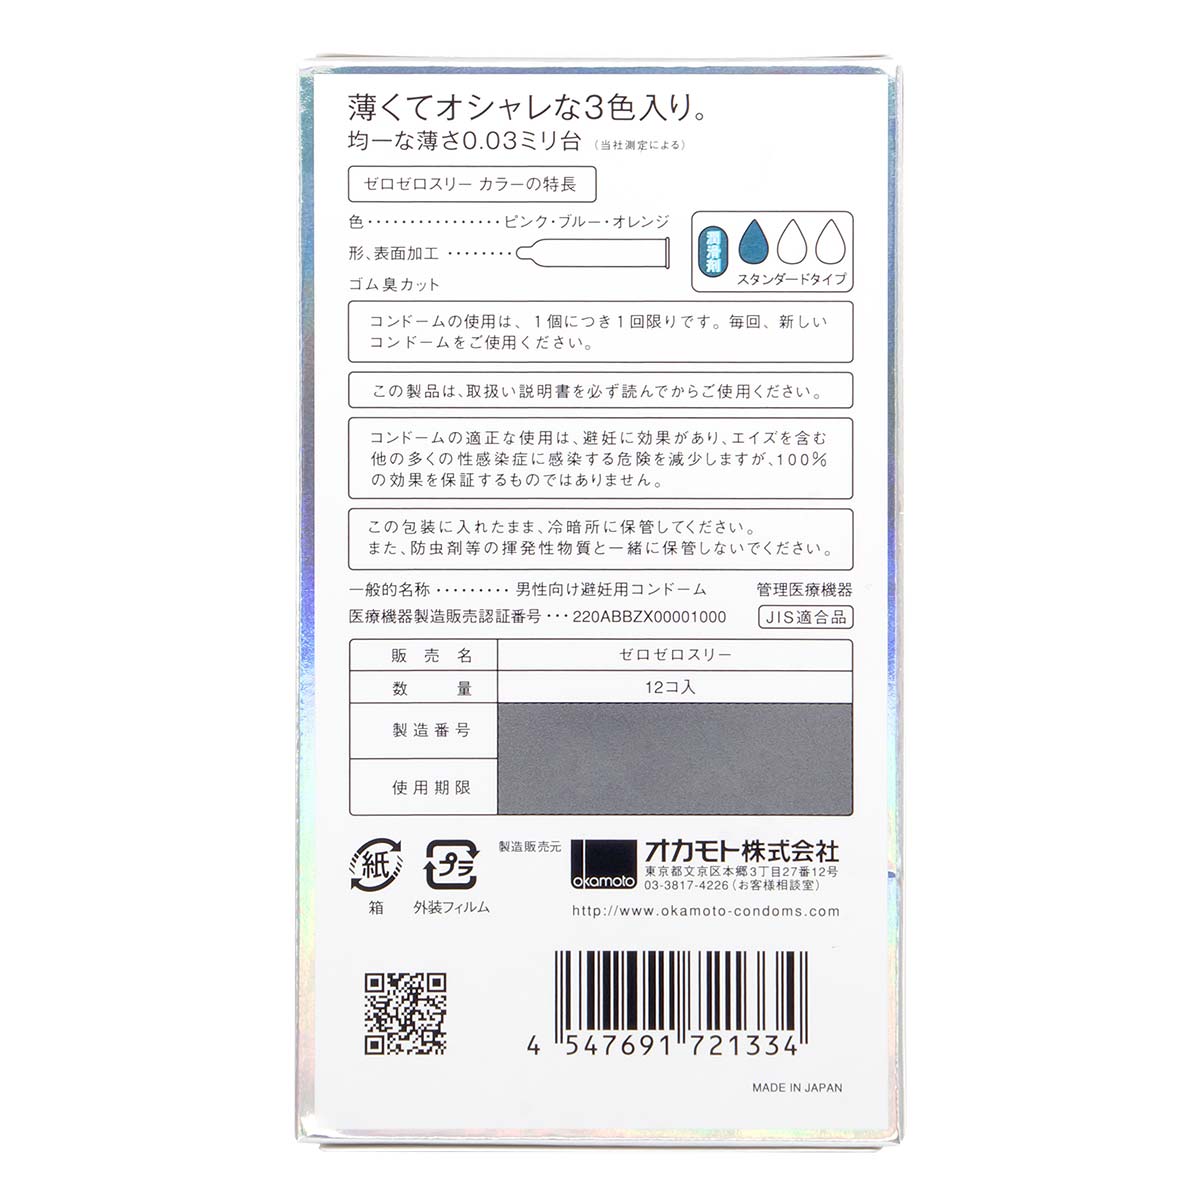 Zero Zero Three 0.03 3-colors (Japan Edition) 12's Pack Latex Condom-p_3